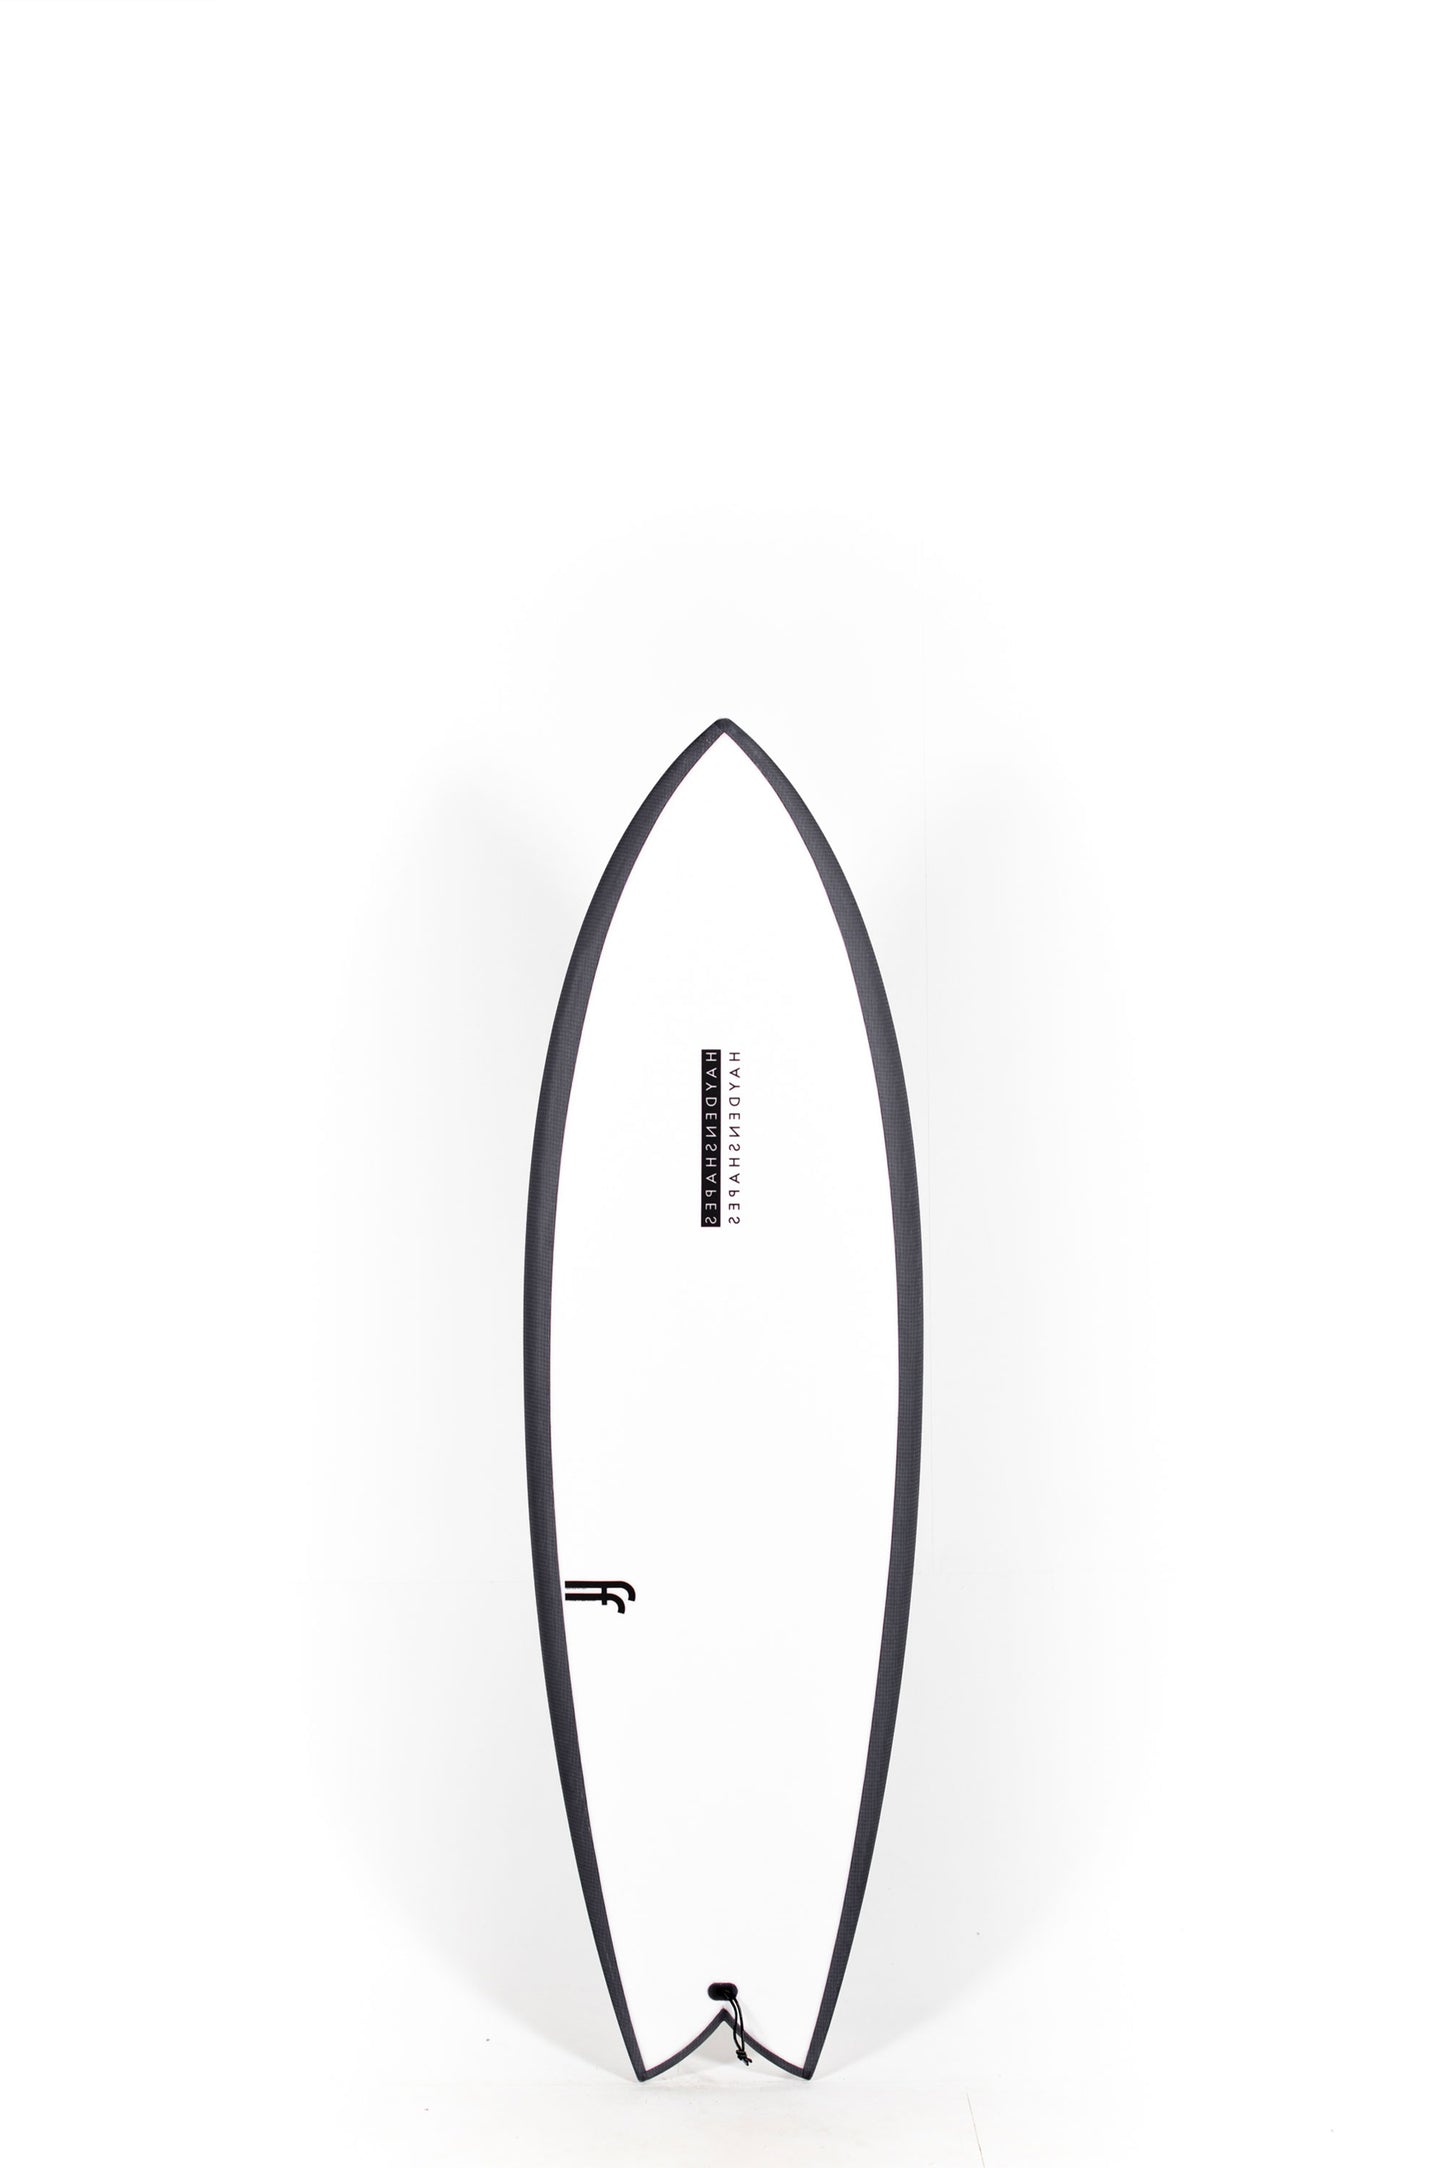 Pukas Surf Shop - HaydenShapes Surfboard - HYPTO KRYPTO TWIN FUTUREFLEX - 5'9" X 20 1/8" X 2 9/16" - 32.67L